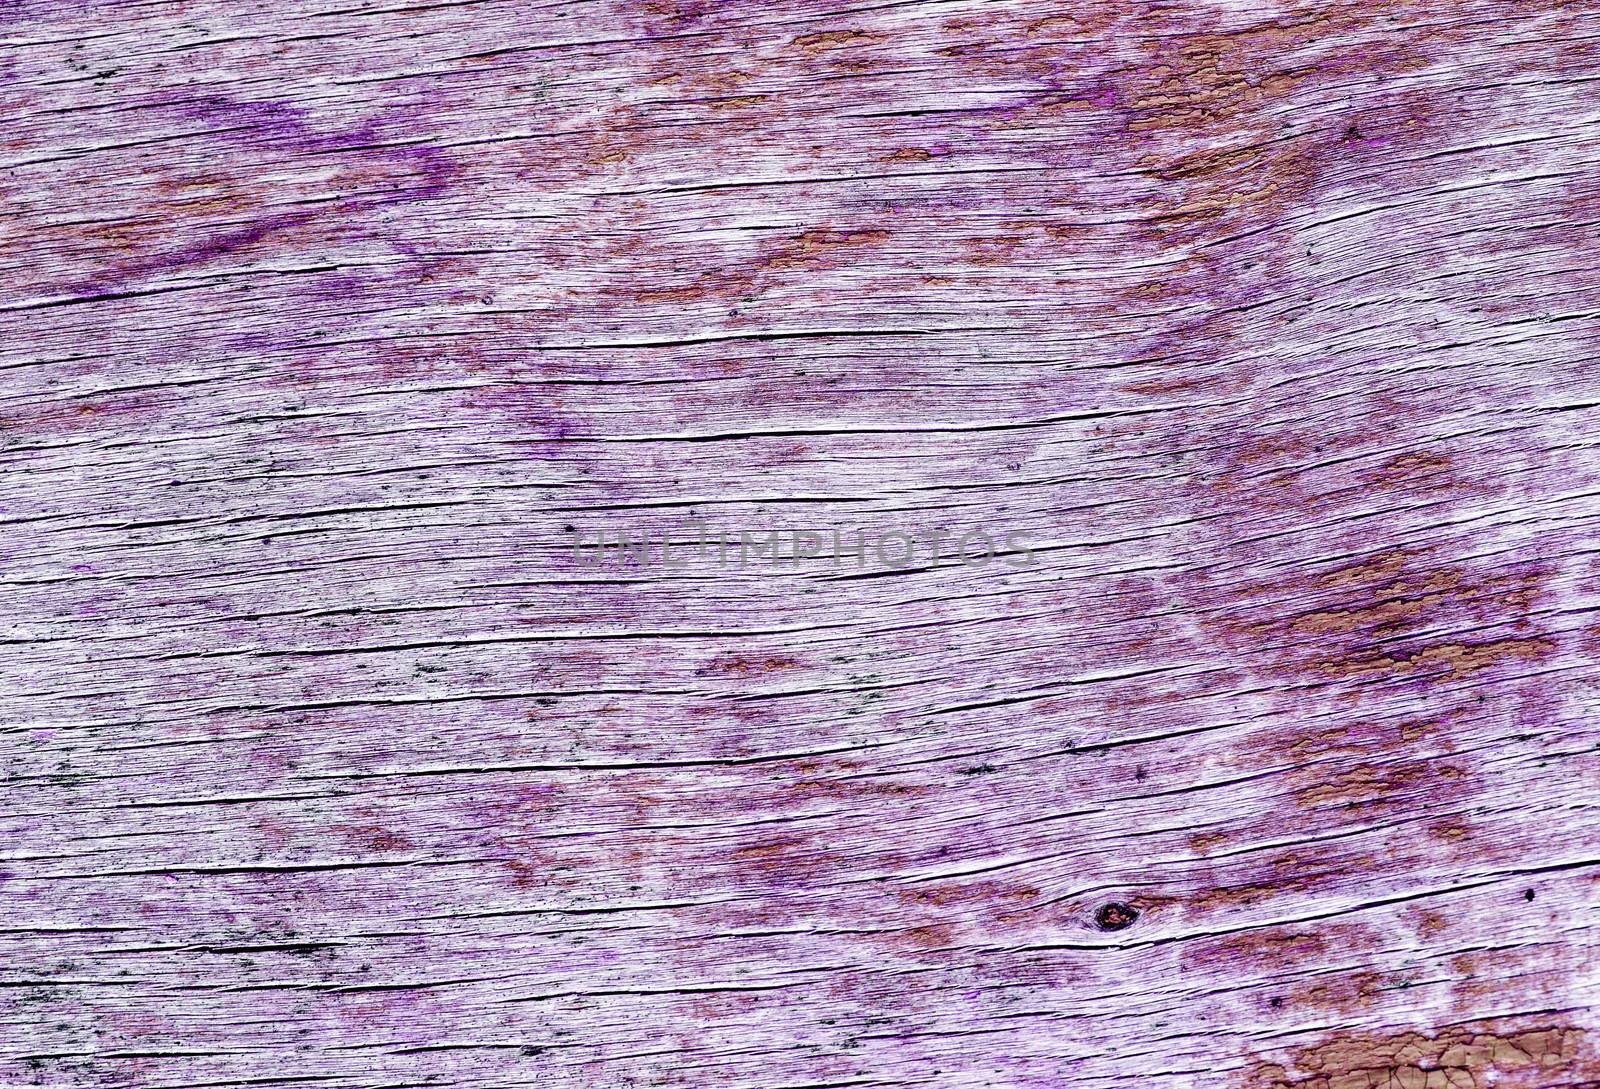 Vintage Grunge Texture Wood Background Painted In Pink by sfinks